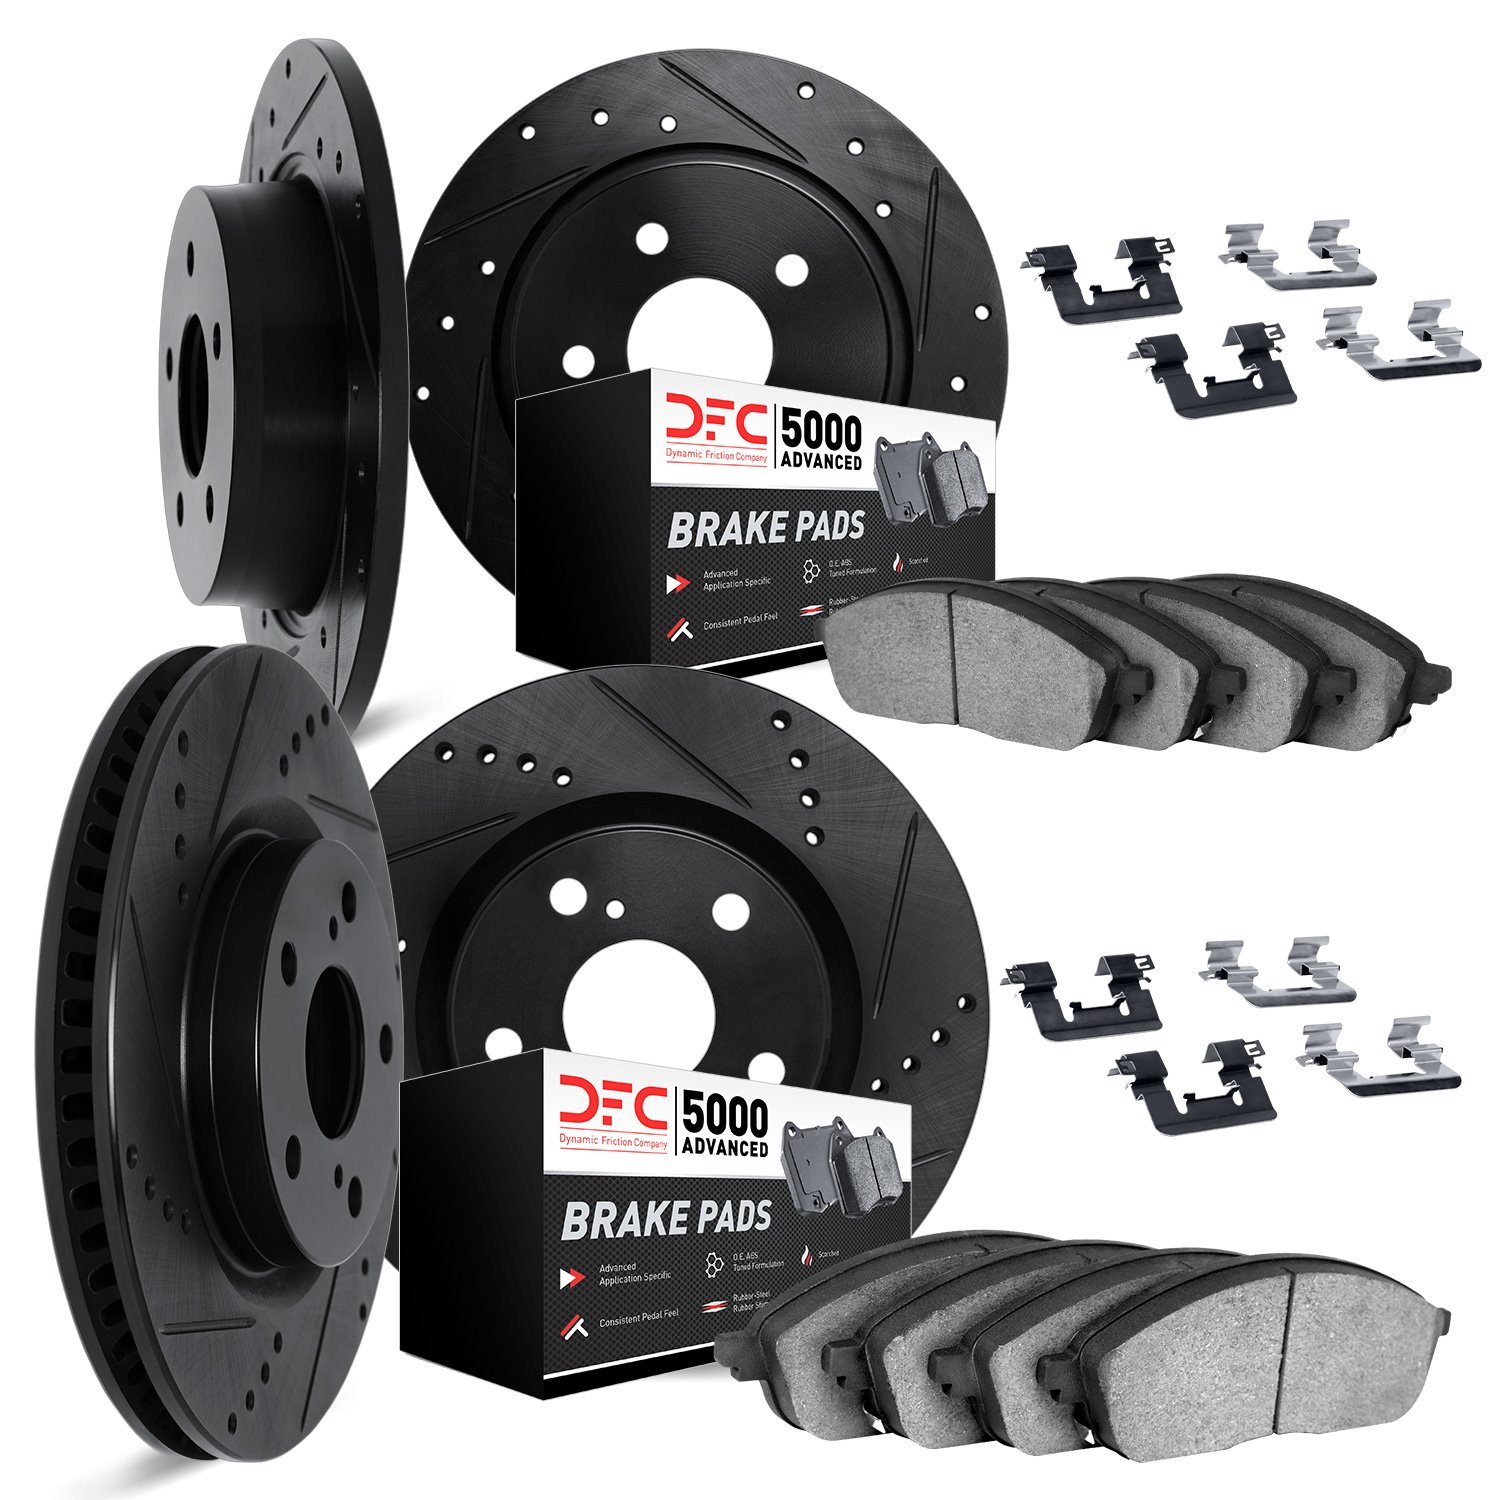 8514-40255 Drilled/Slotted Brake Rotors w/5000 Advanced Brake Pads Kit & Hardware [Black], 1991-1992 Mopar, Position: Front and